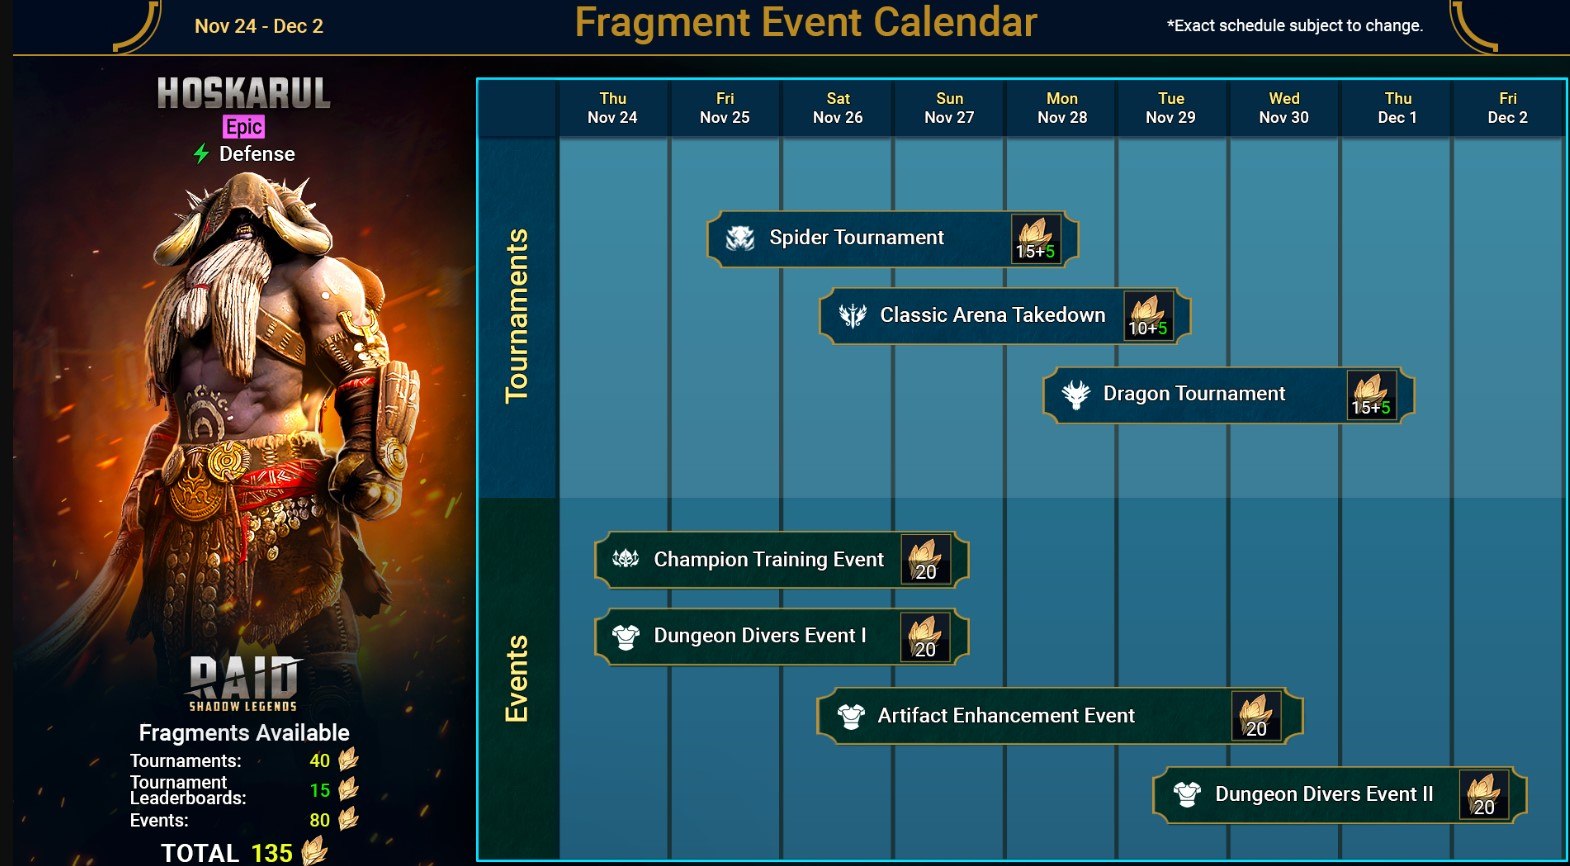 RAID: Shadow Legends – Hoskarul Fragment Fusion Event Guide